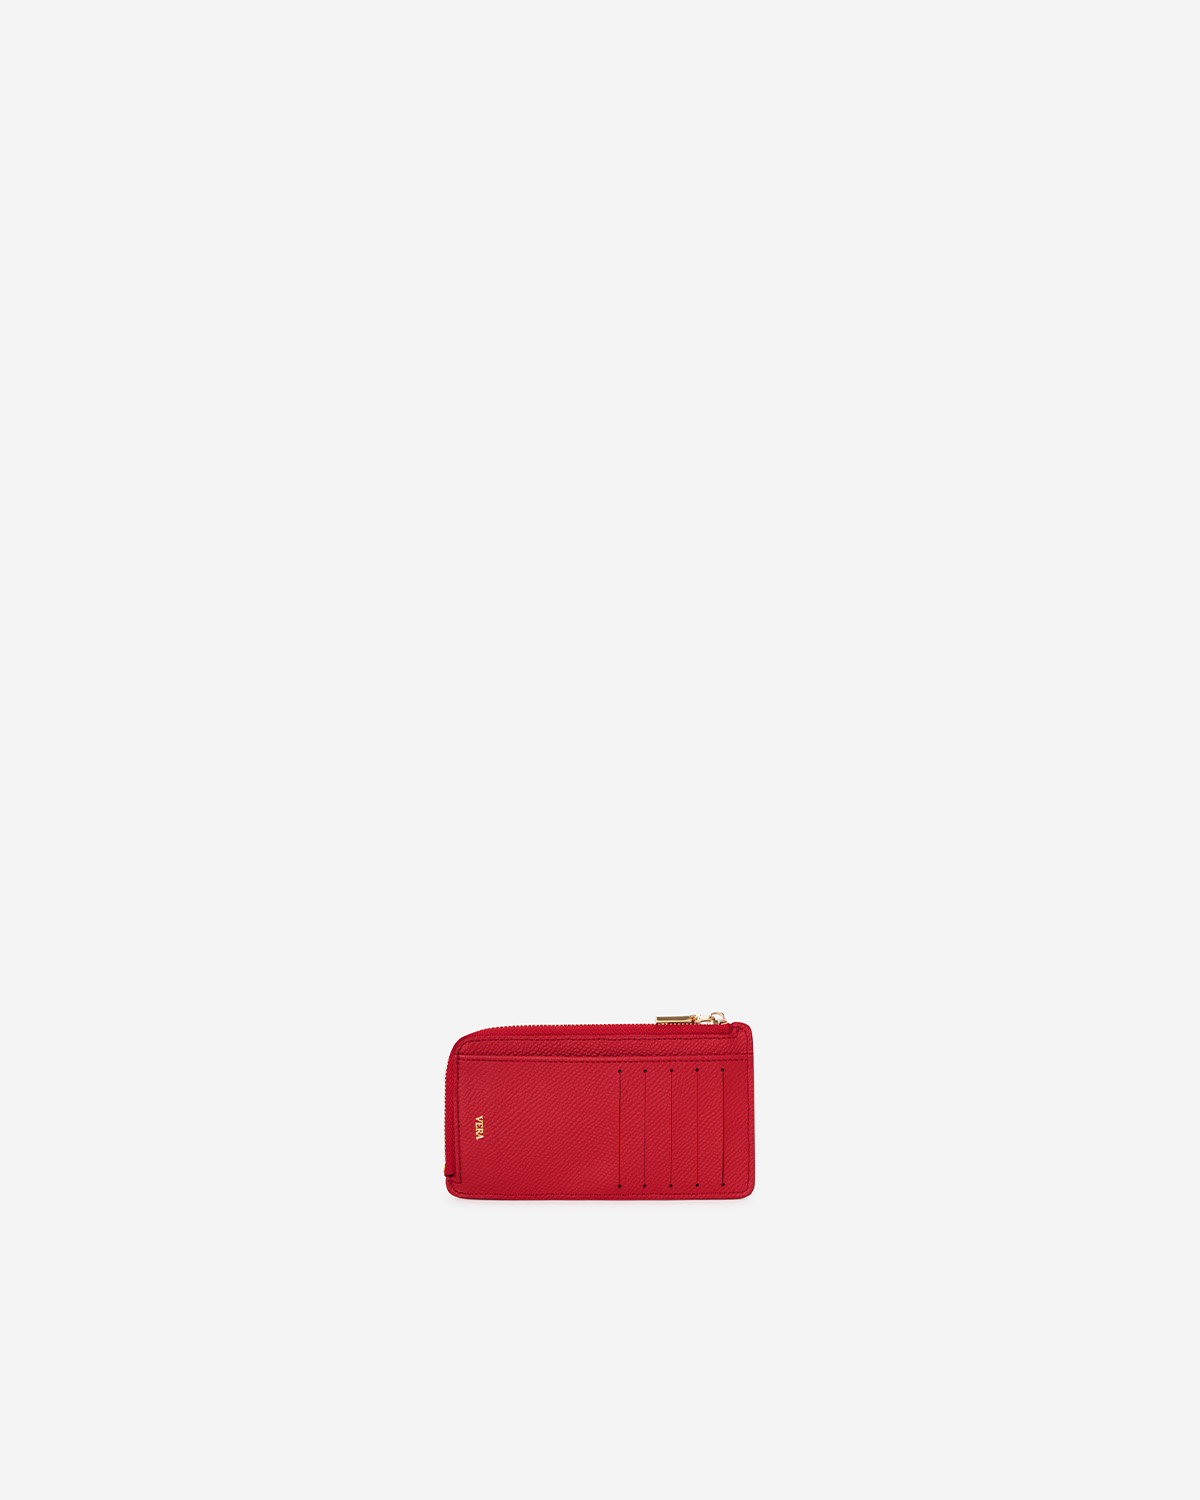 VERA Emily Long Card holder in Passionate Red กระเป๋าใส่บัตรหนังแท้ ทรงยาว พร้อมช่องซิบ สีแดง